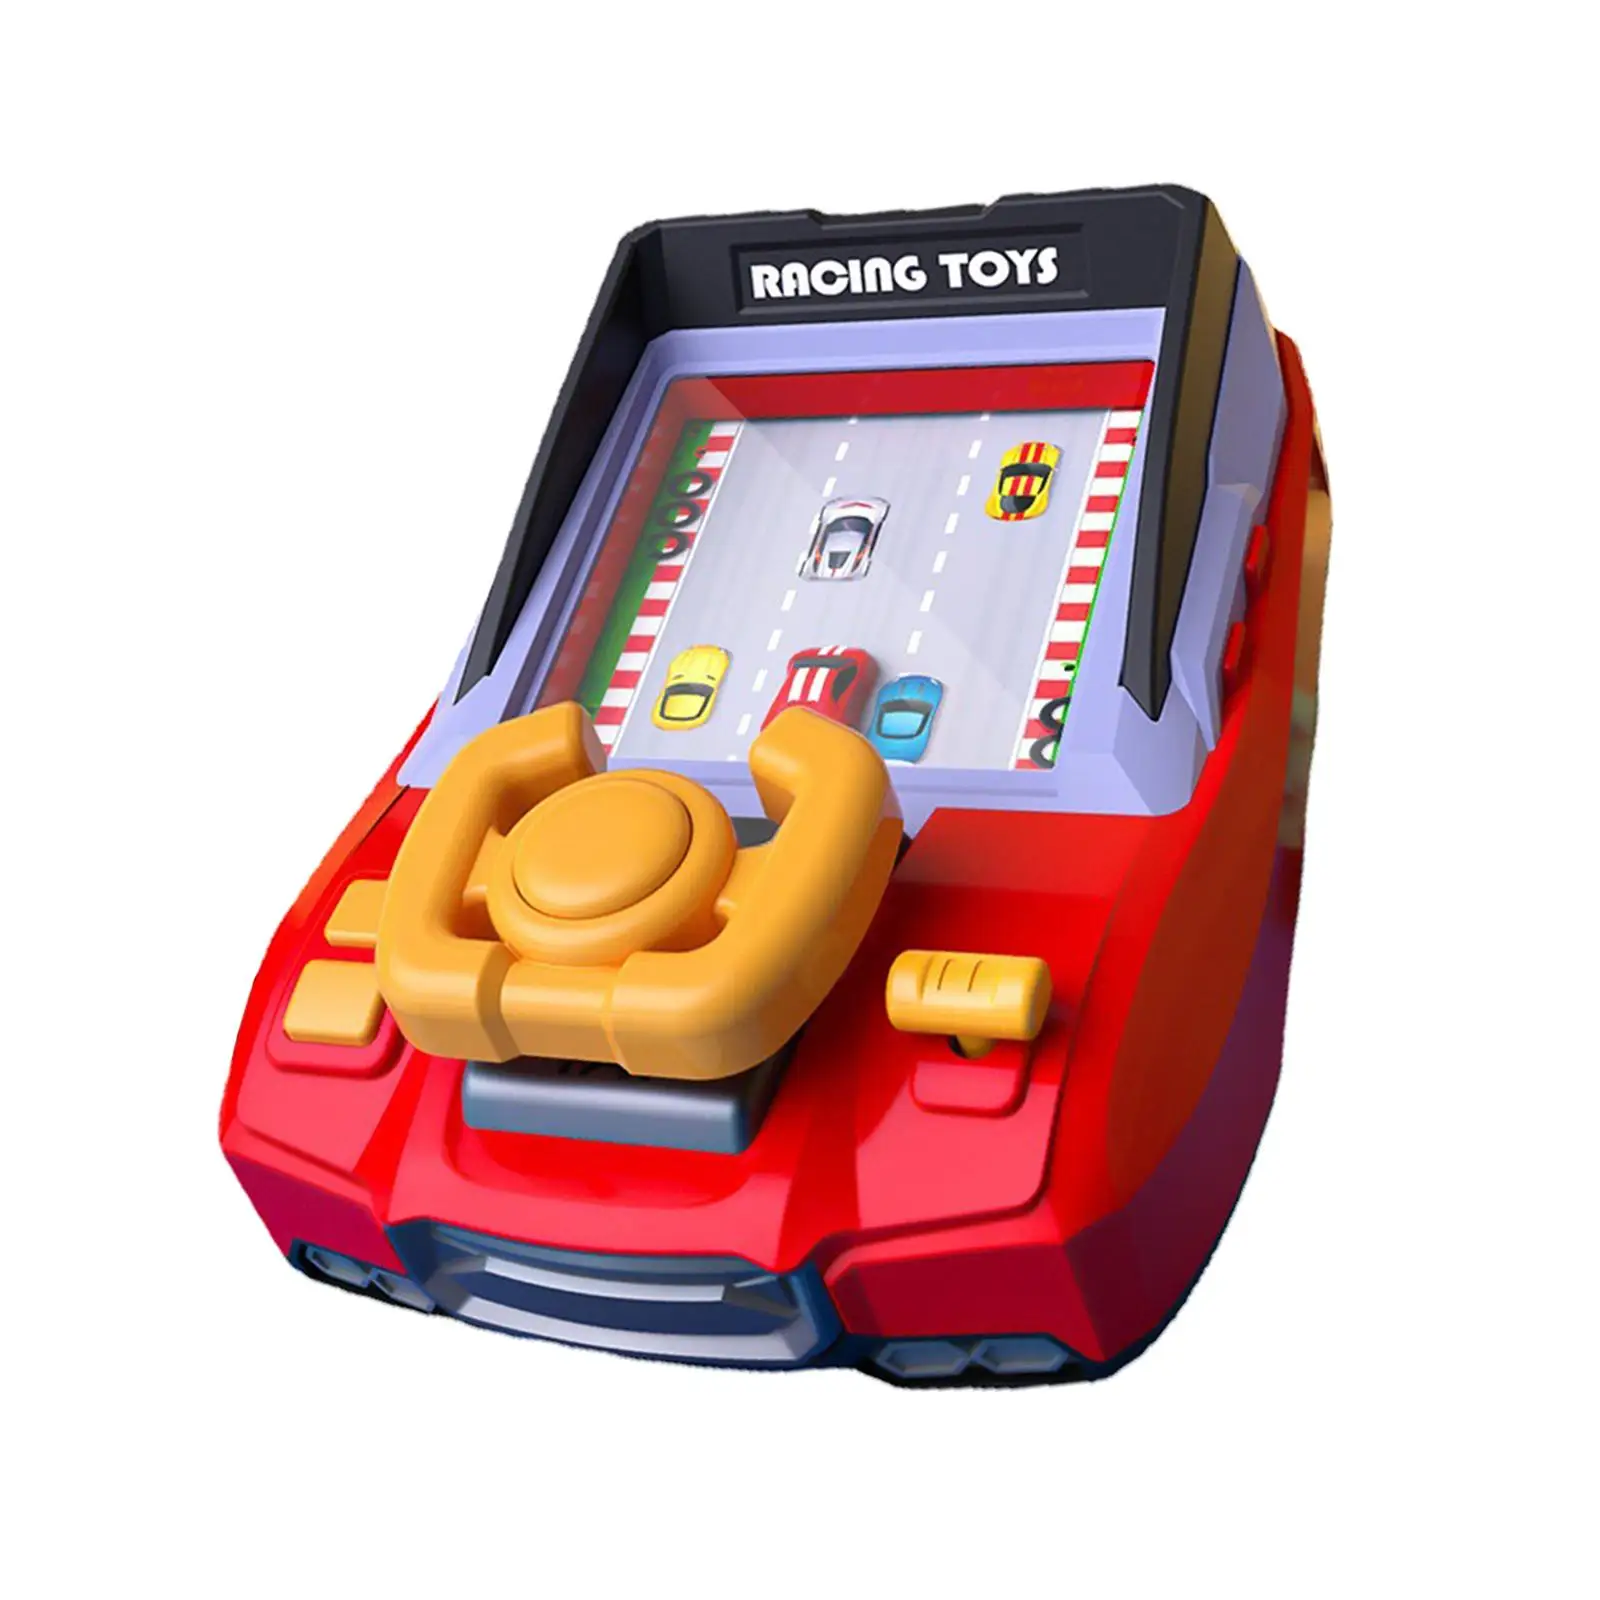 idealsgarden Adventure Machine Steering Wheel Toy with Music for Games